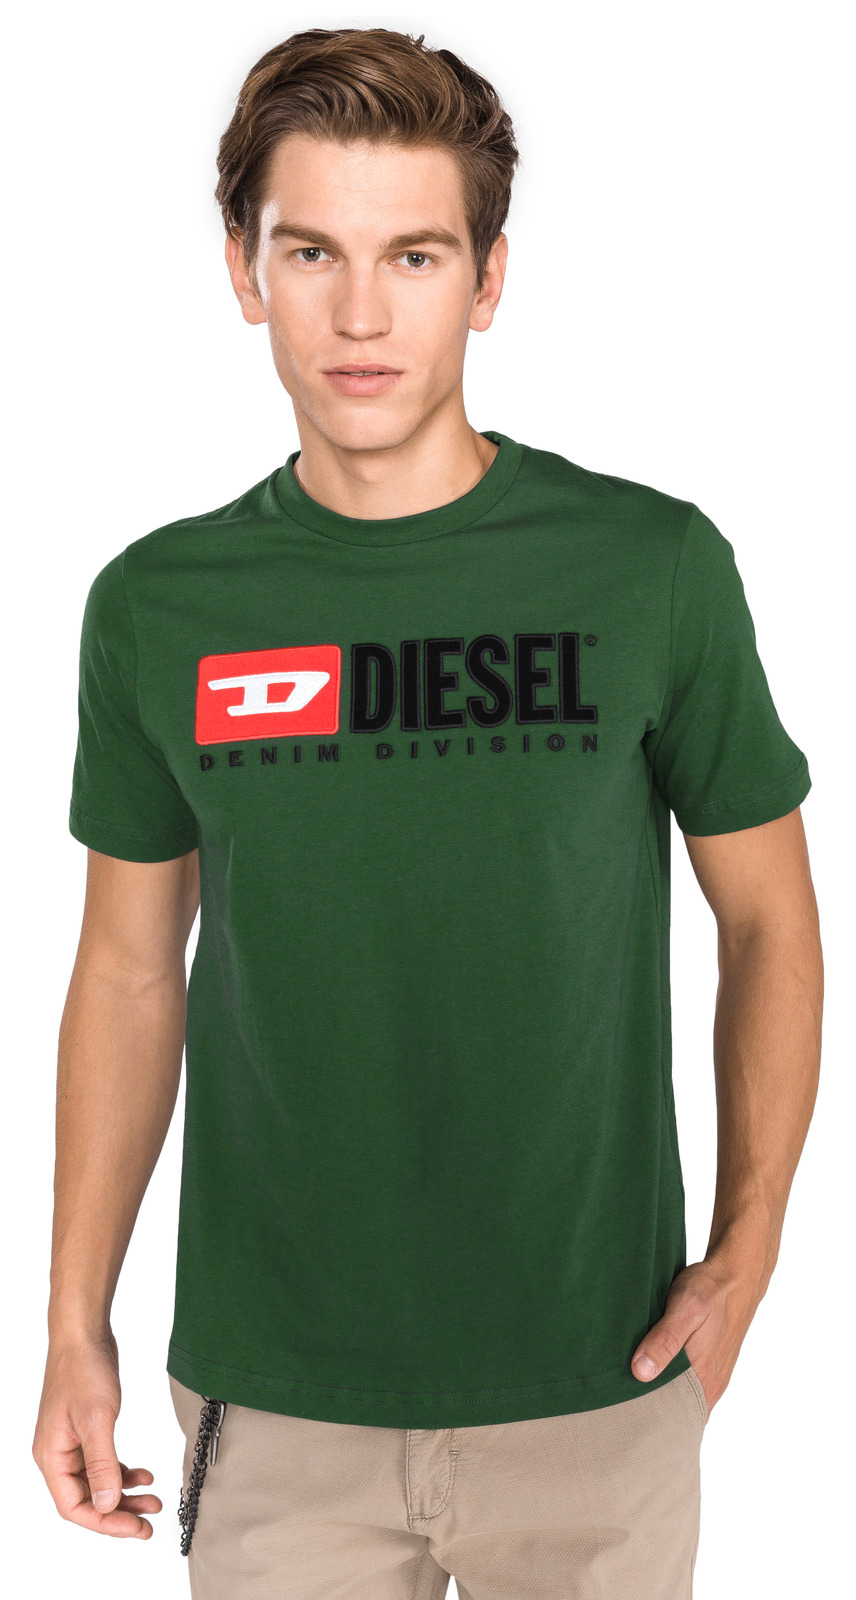 Diesel Just Division Póló Zöld << lejárt 3249519 35 fotója